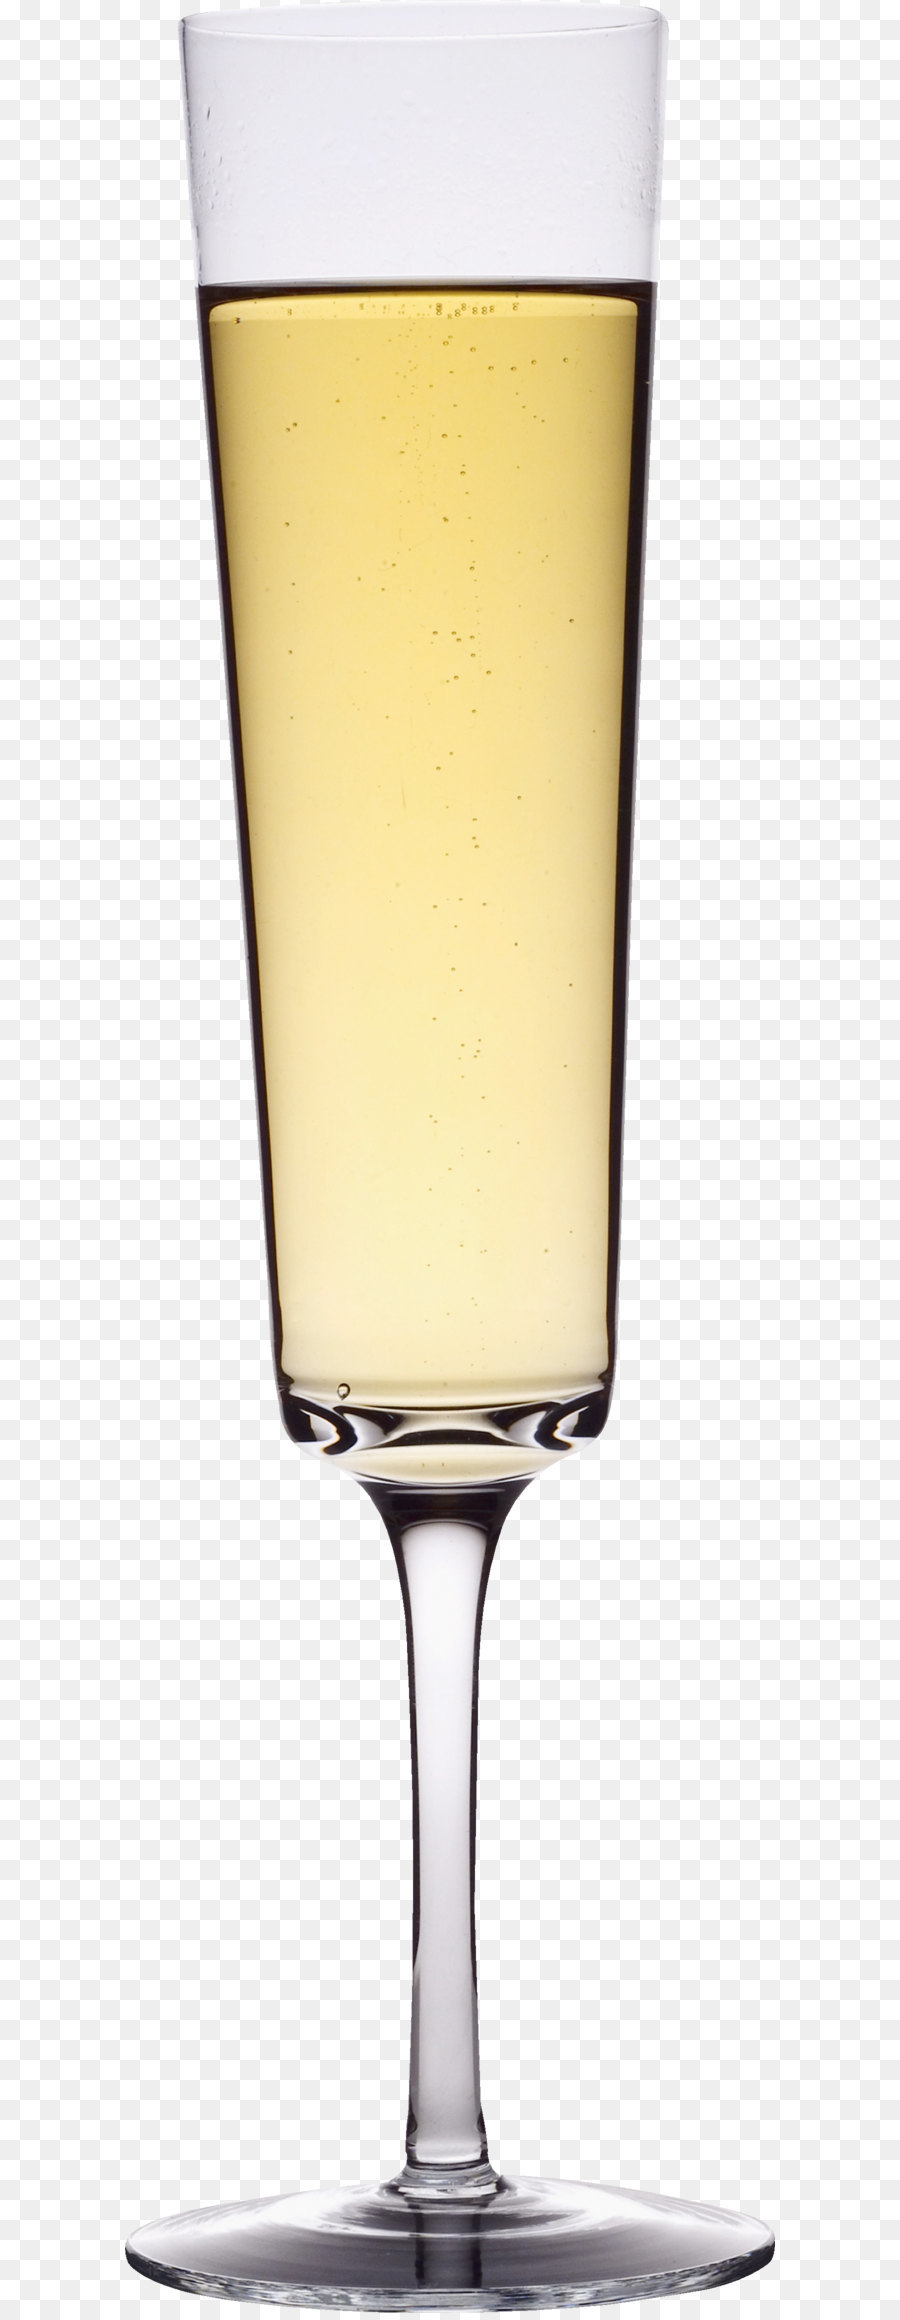 Champagner Cocktail Wein Glas - Glas png Bild